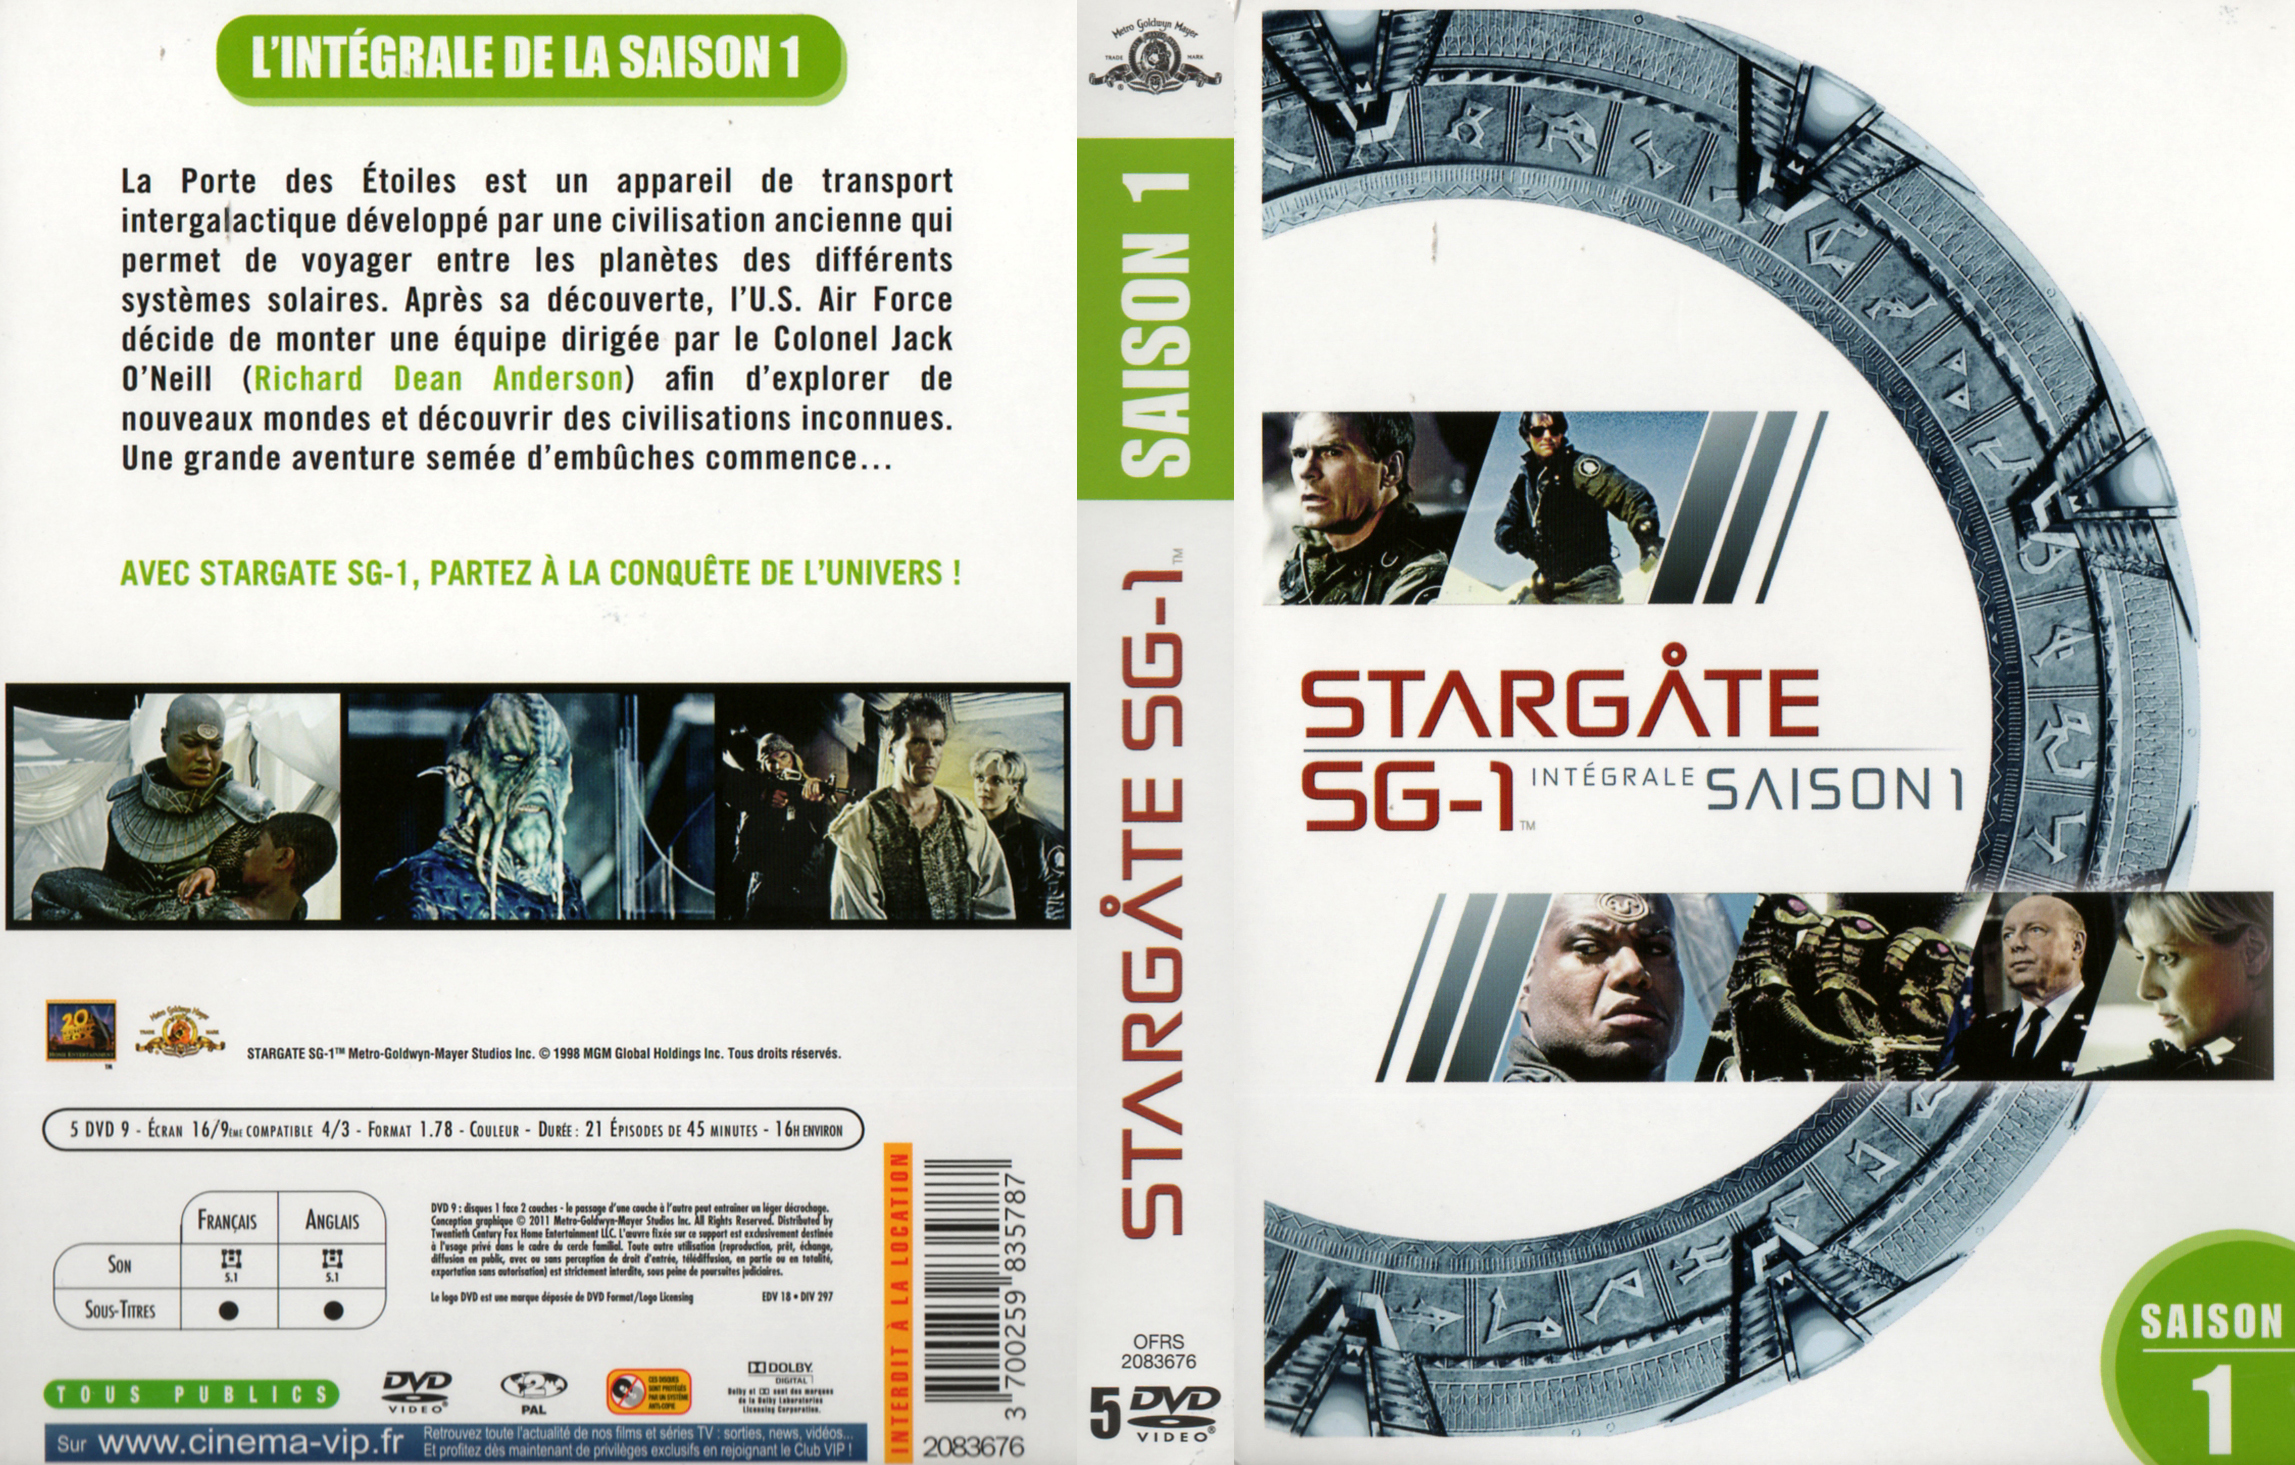 Jaquette DVD Stargate SG1 saison 1 COFFRET v2